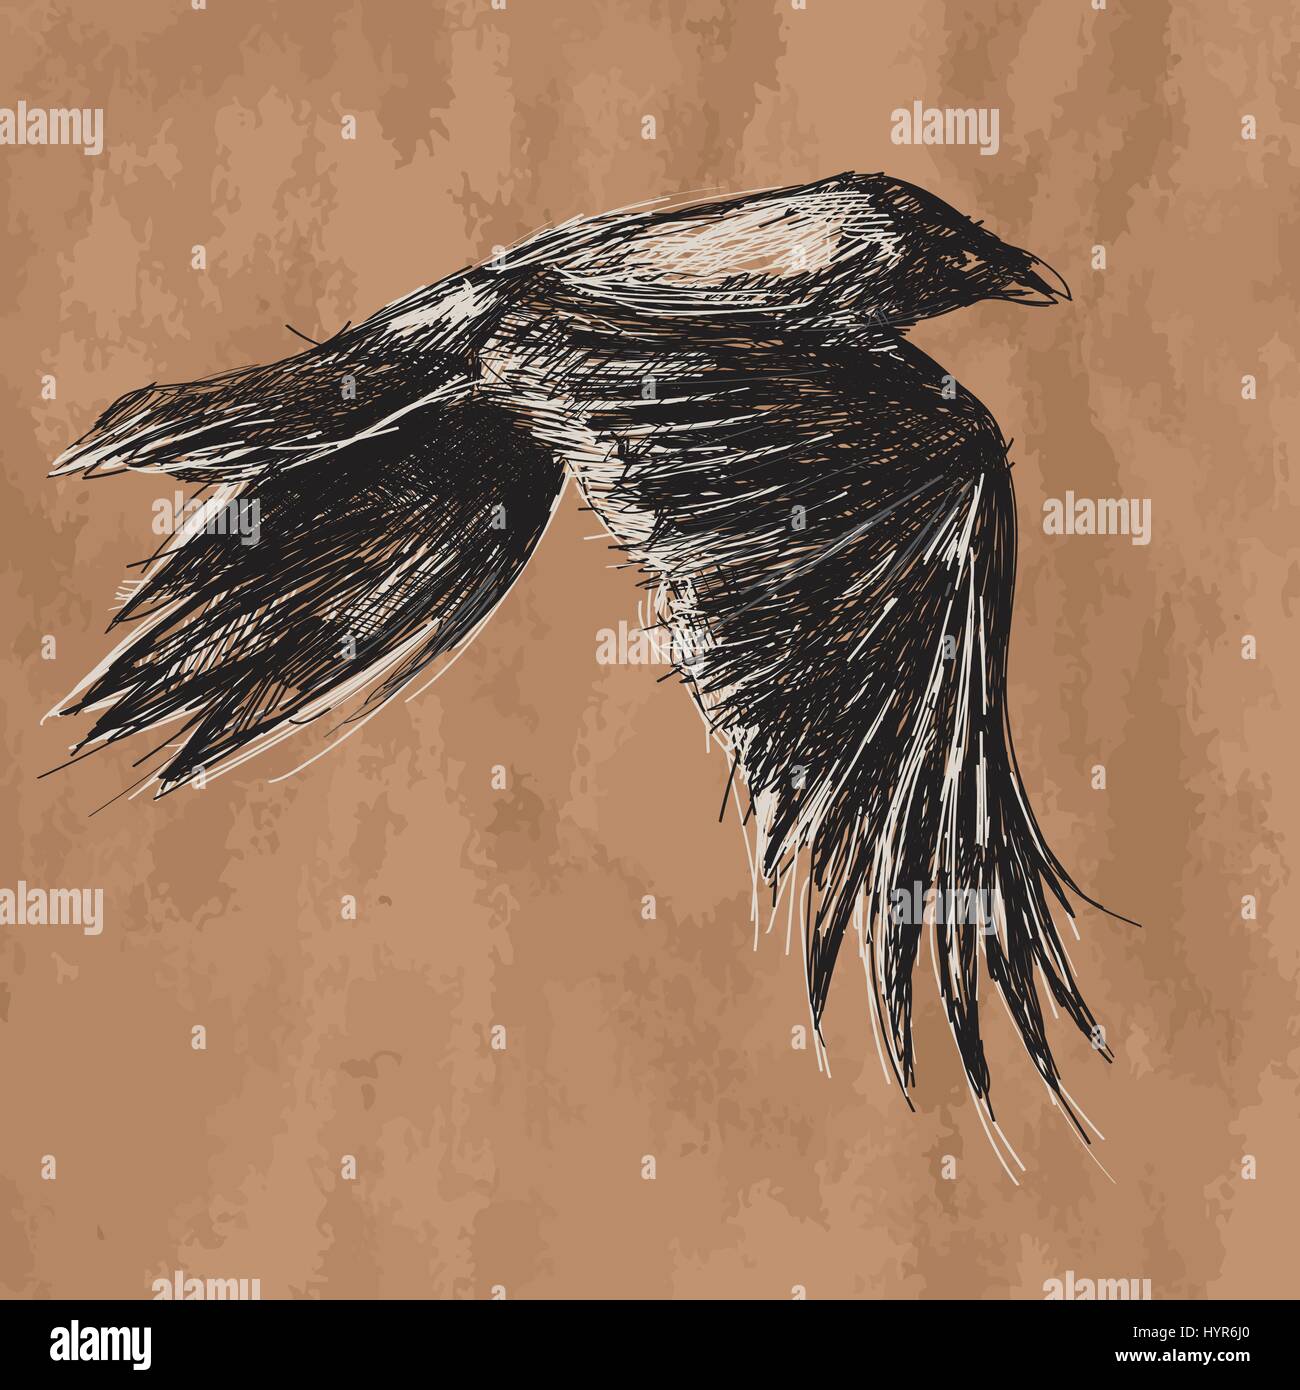 Premium Vector  Flying crow silhouette